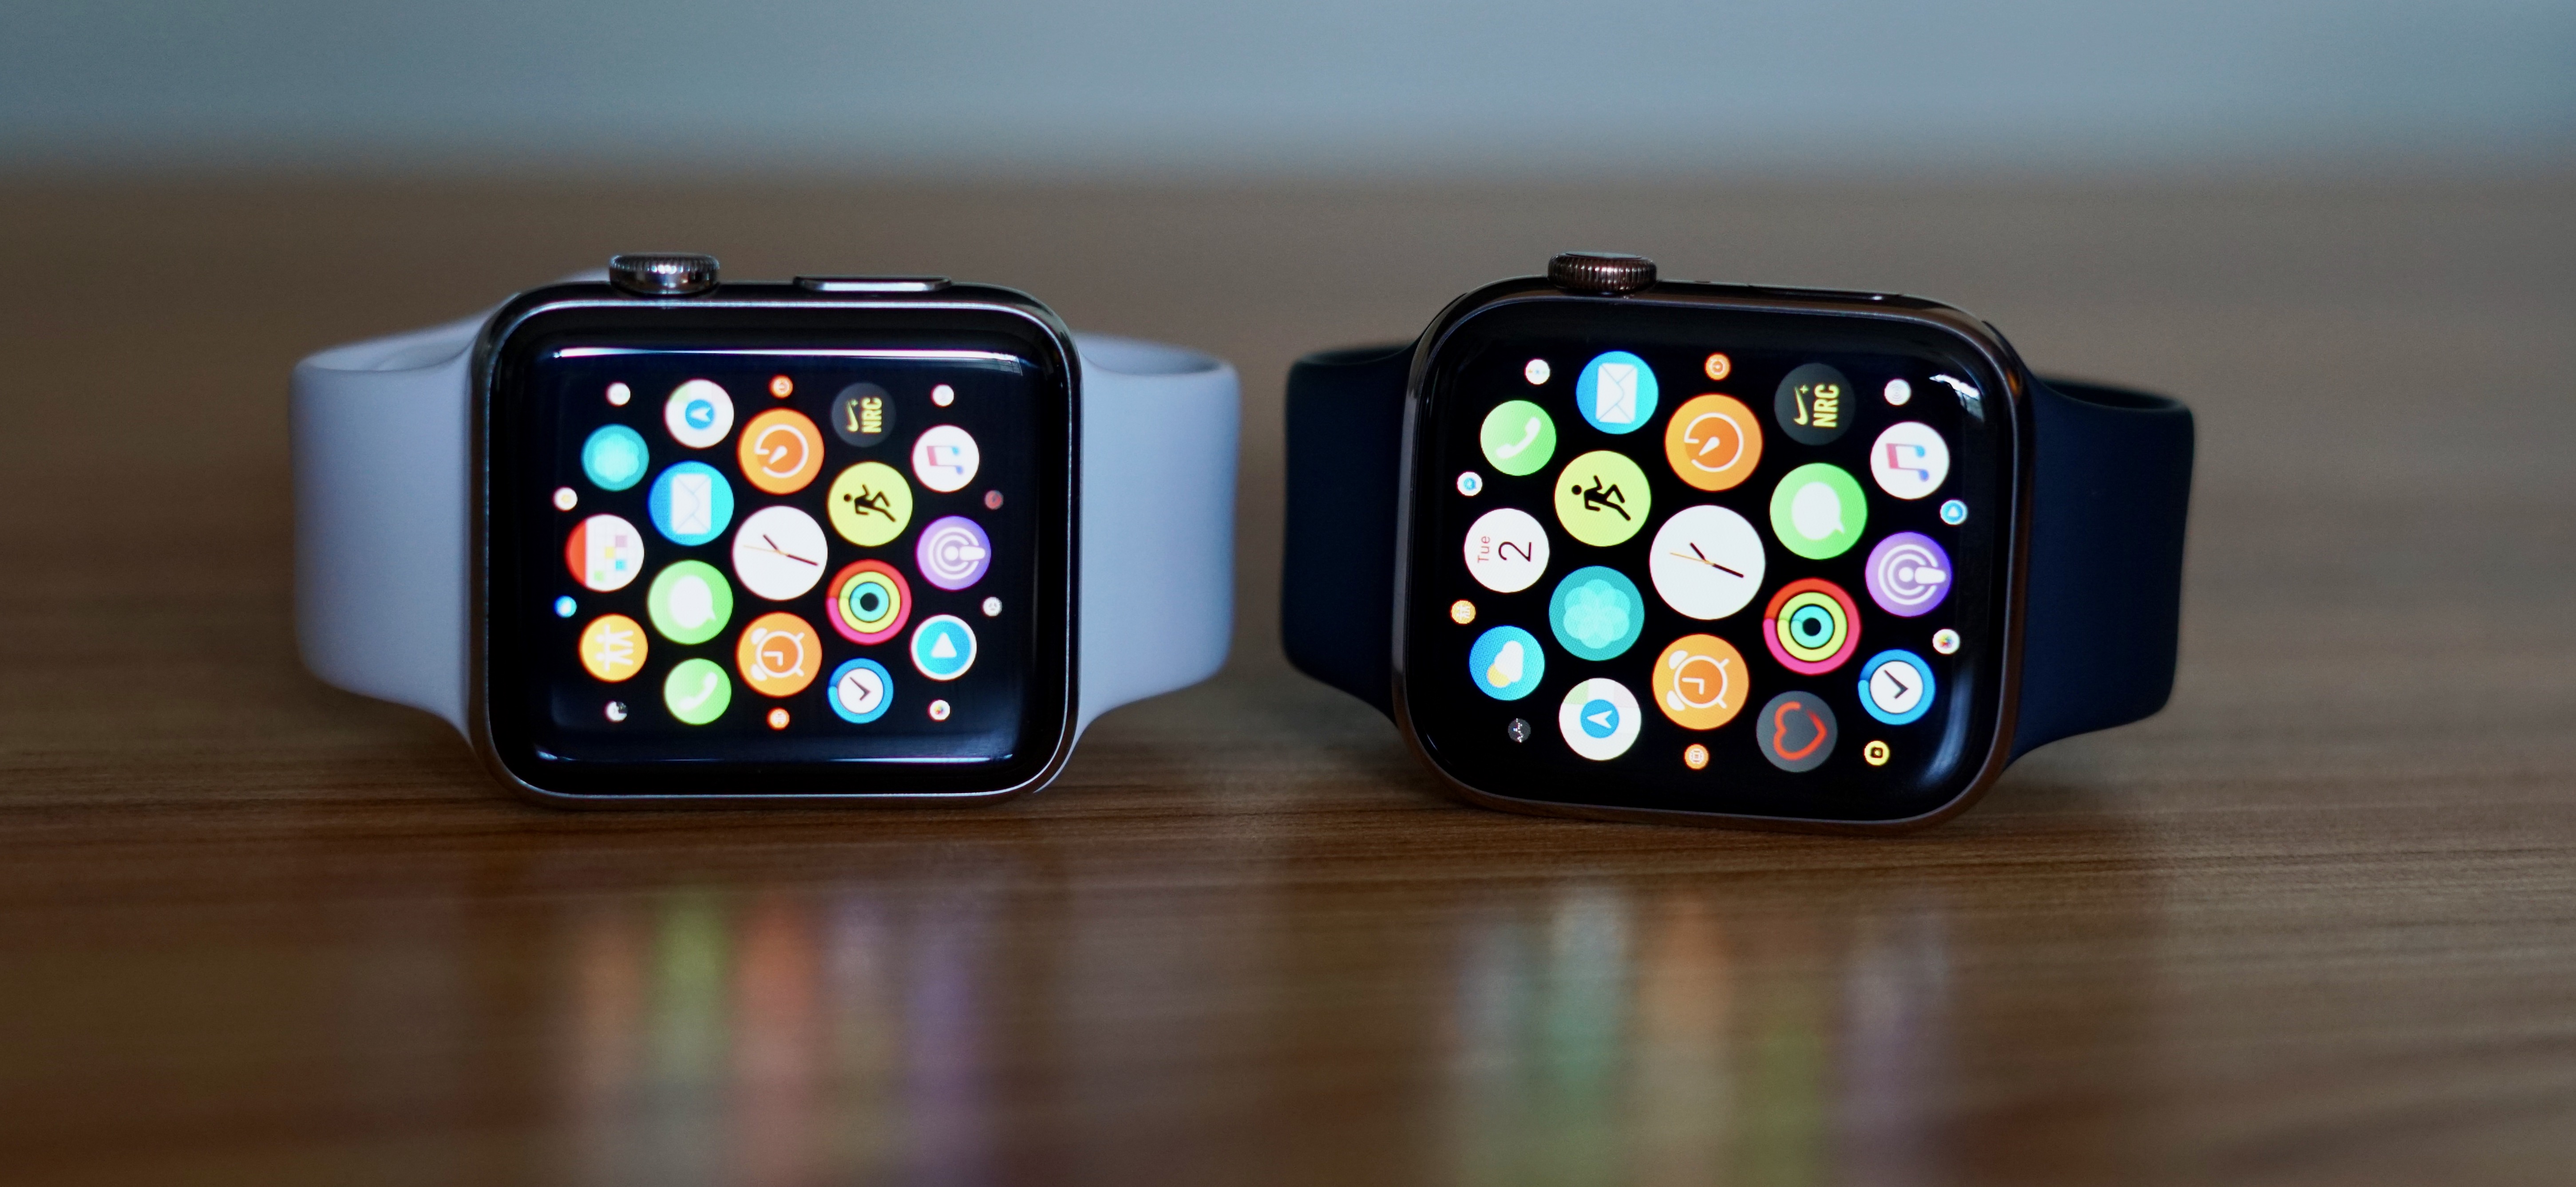 apple smartwatch series 4 features